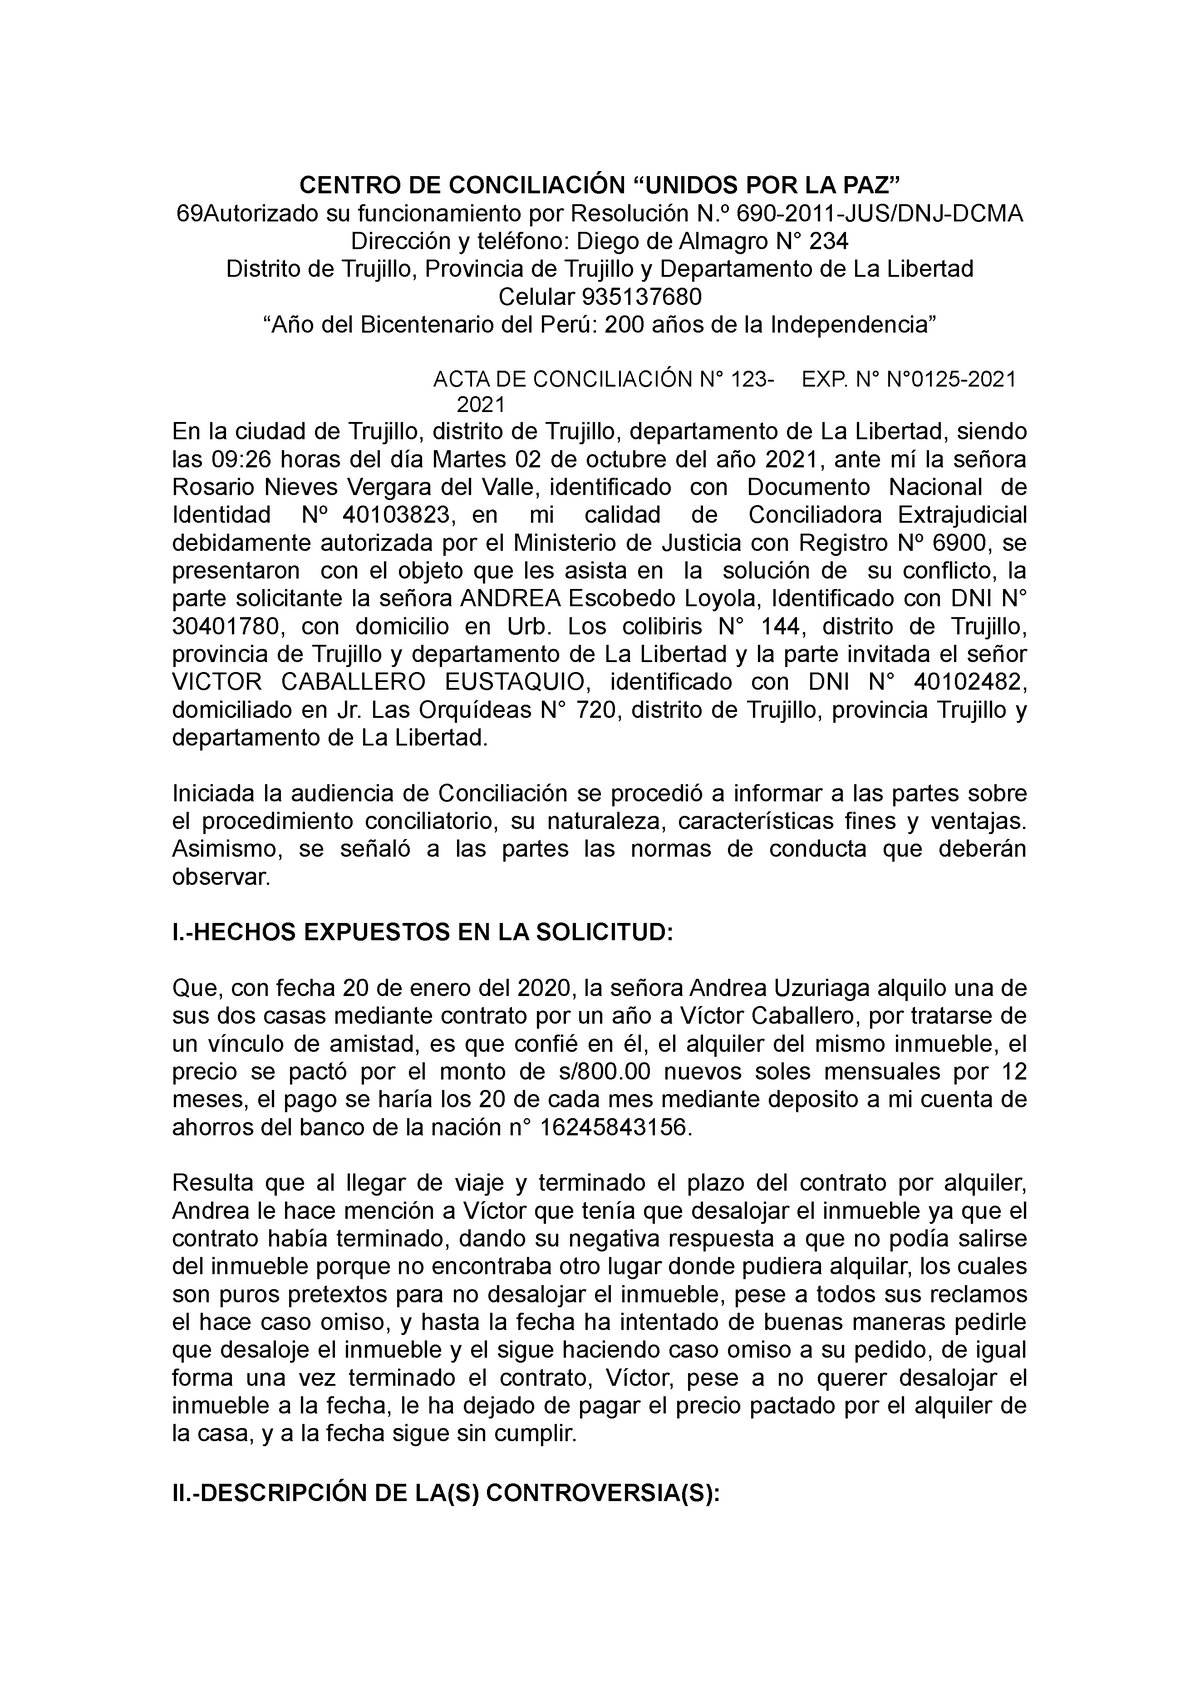 Ejemplo De Acta De Conciliaci N Borrador Centro De